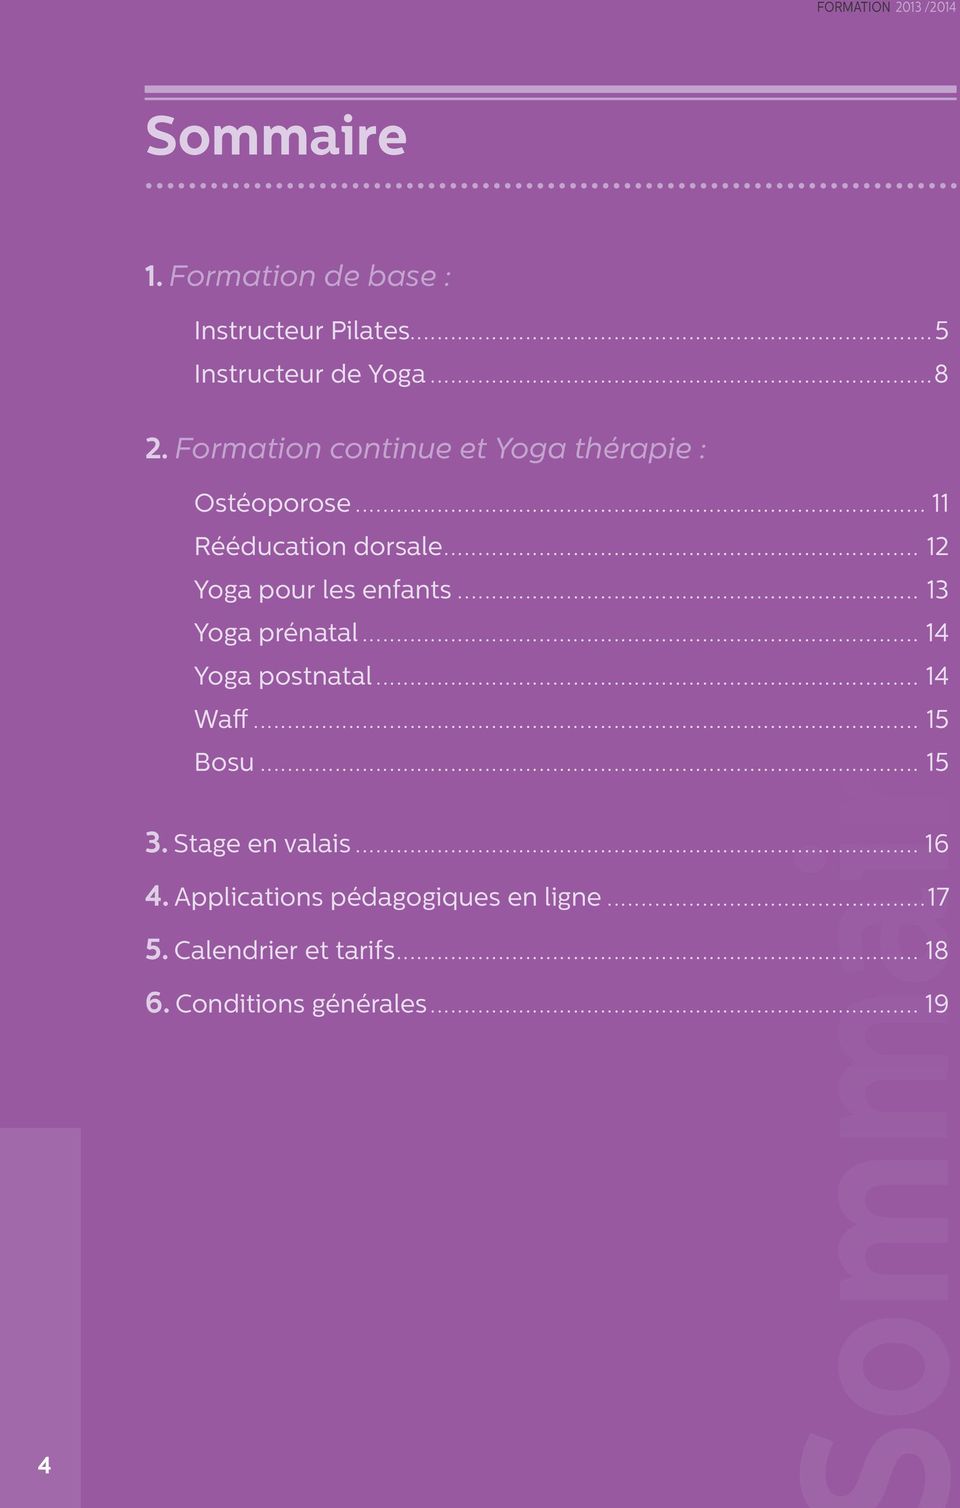 13 Yoga prénatal 14 ommaire Yoga postnatal 14 Waff 15 Bosu 15 3 Stage en valais 16 4